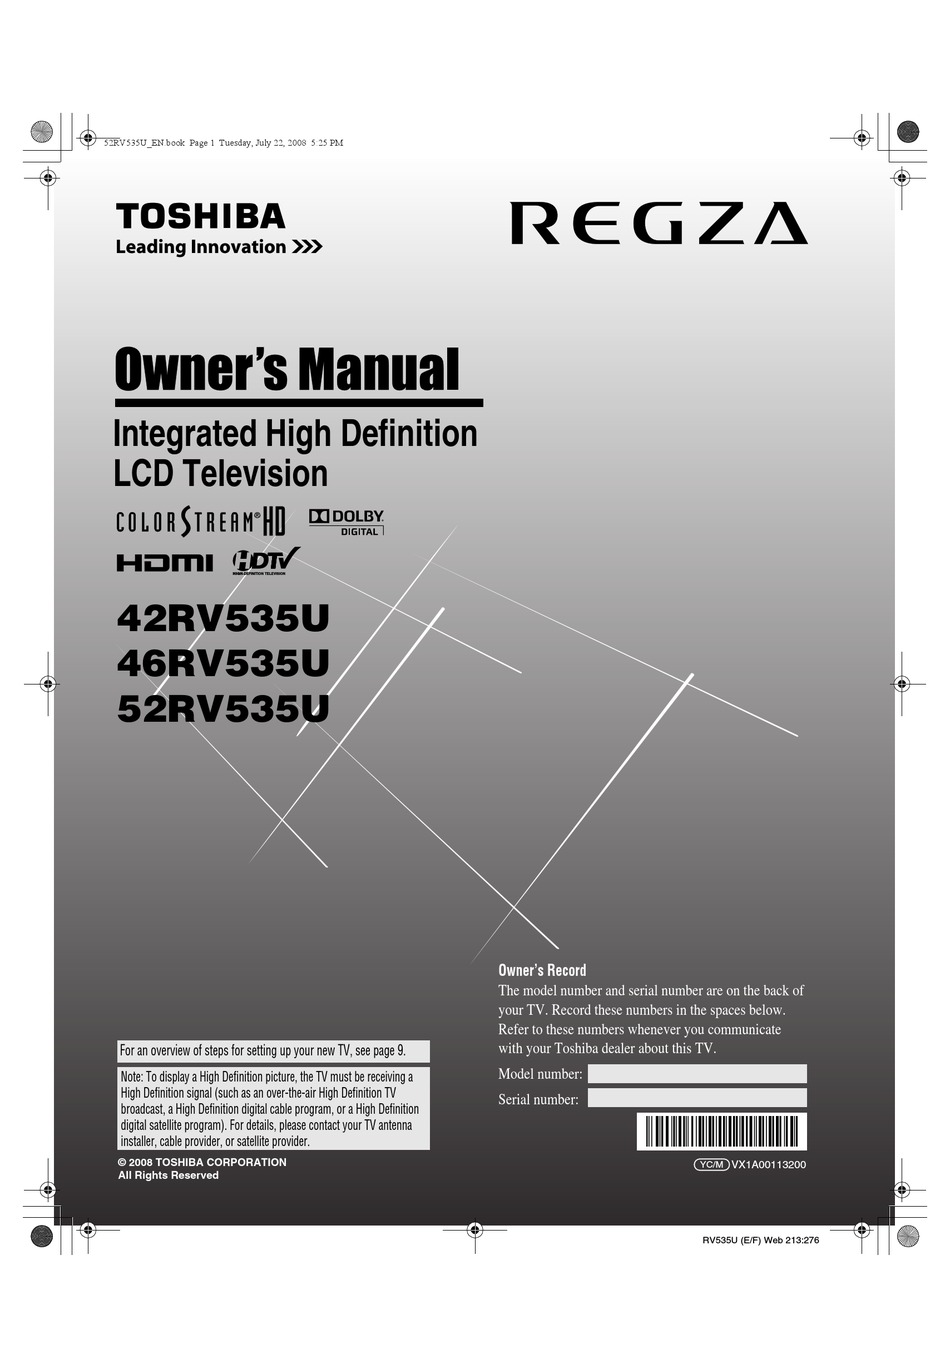 TOSHIBA REGZA 42RV535U OWNER'S MANUAL Pdf Download | ManualsLib